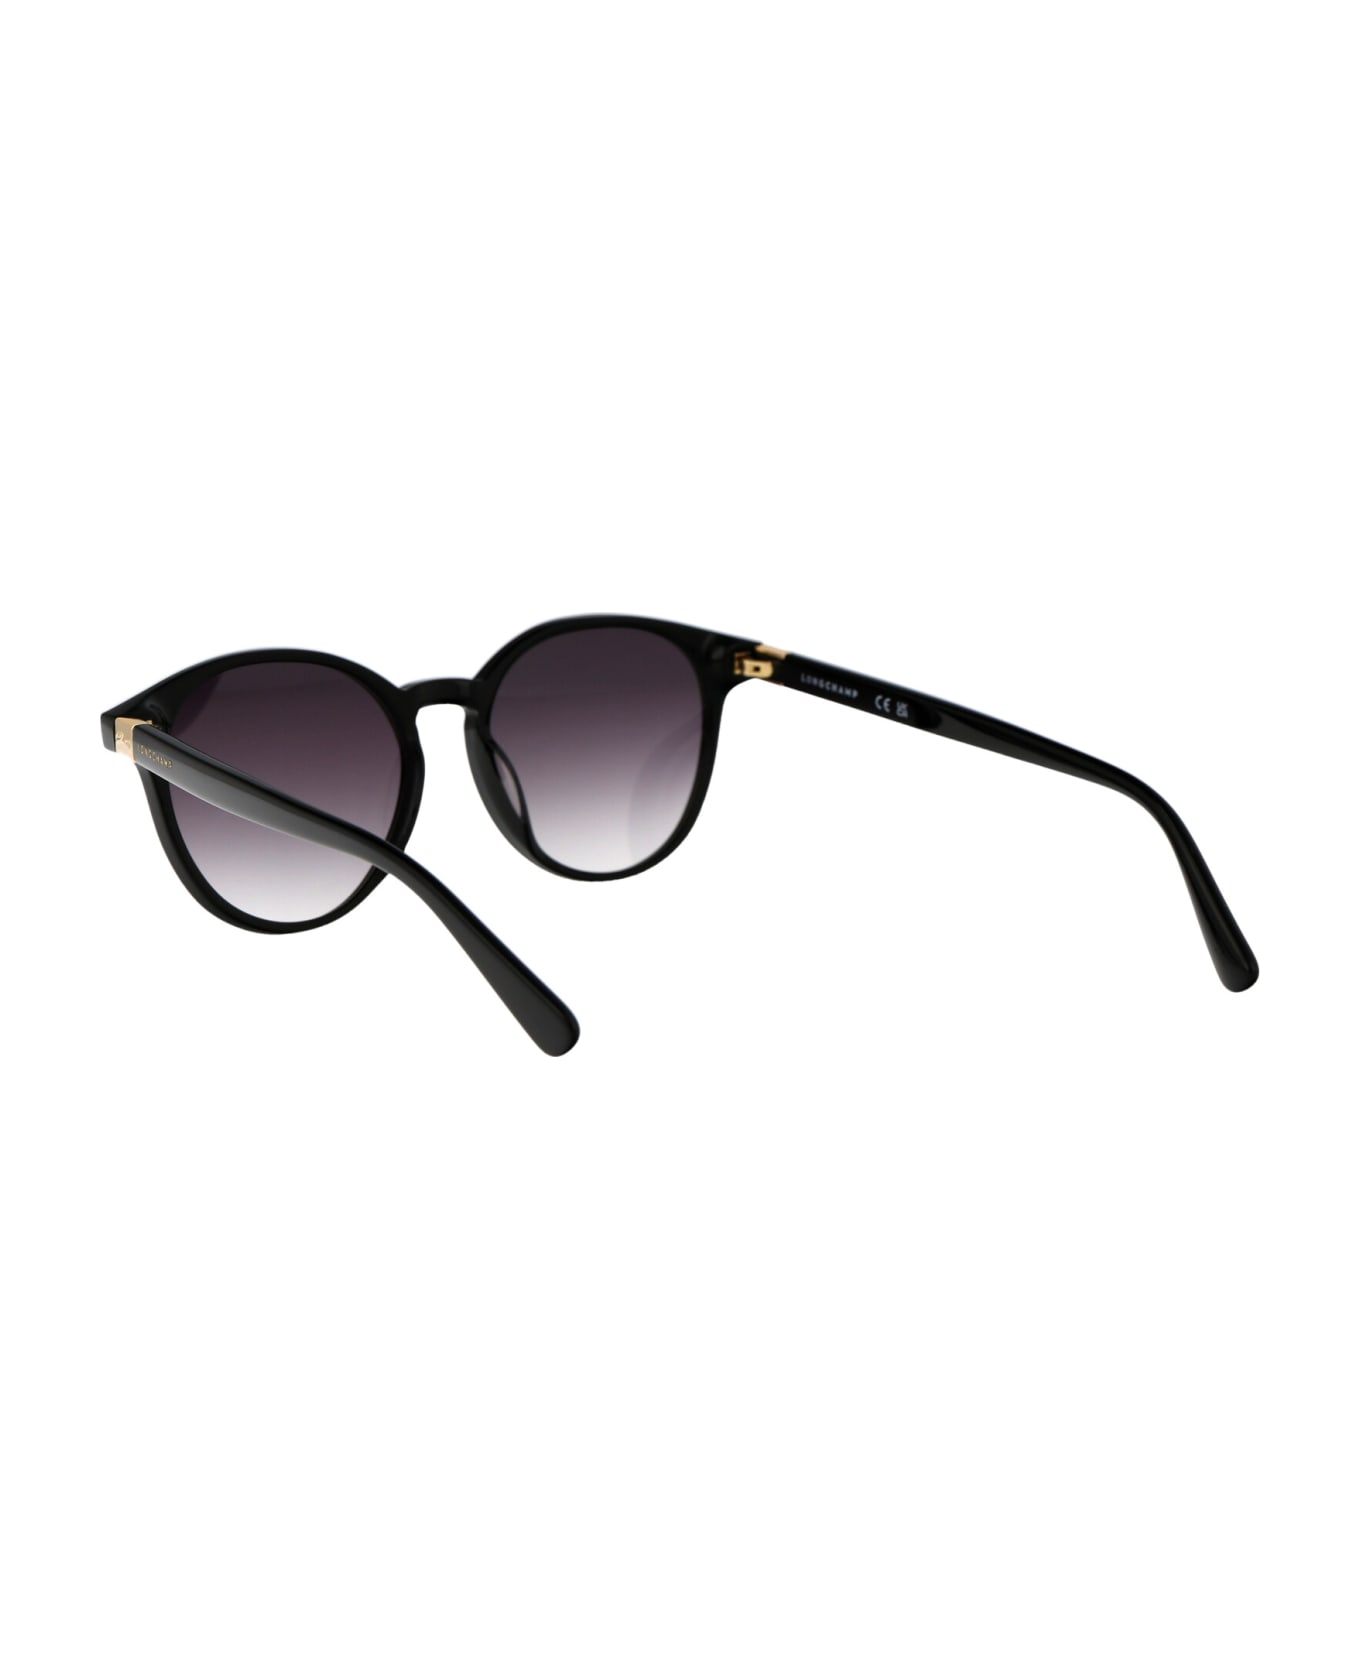 Longchamp Lo658s Sunglasses - 001 BLACK